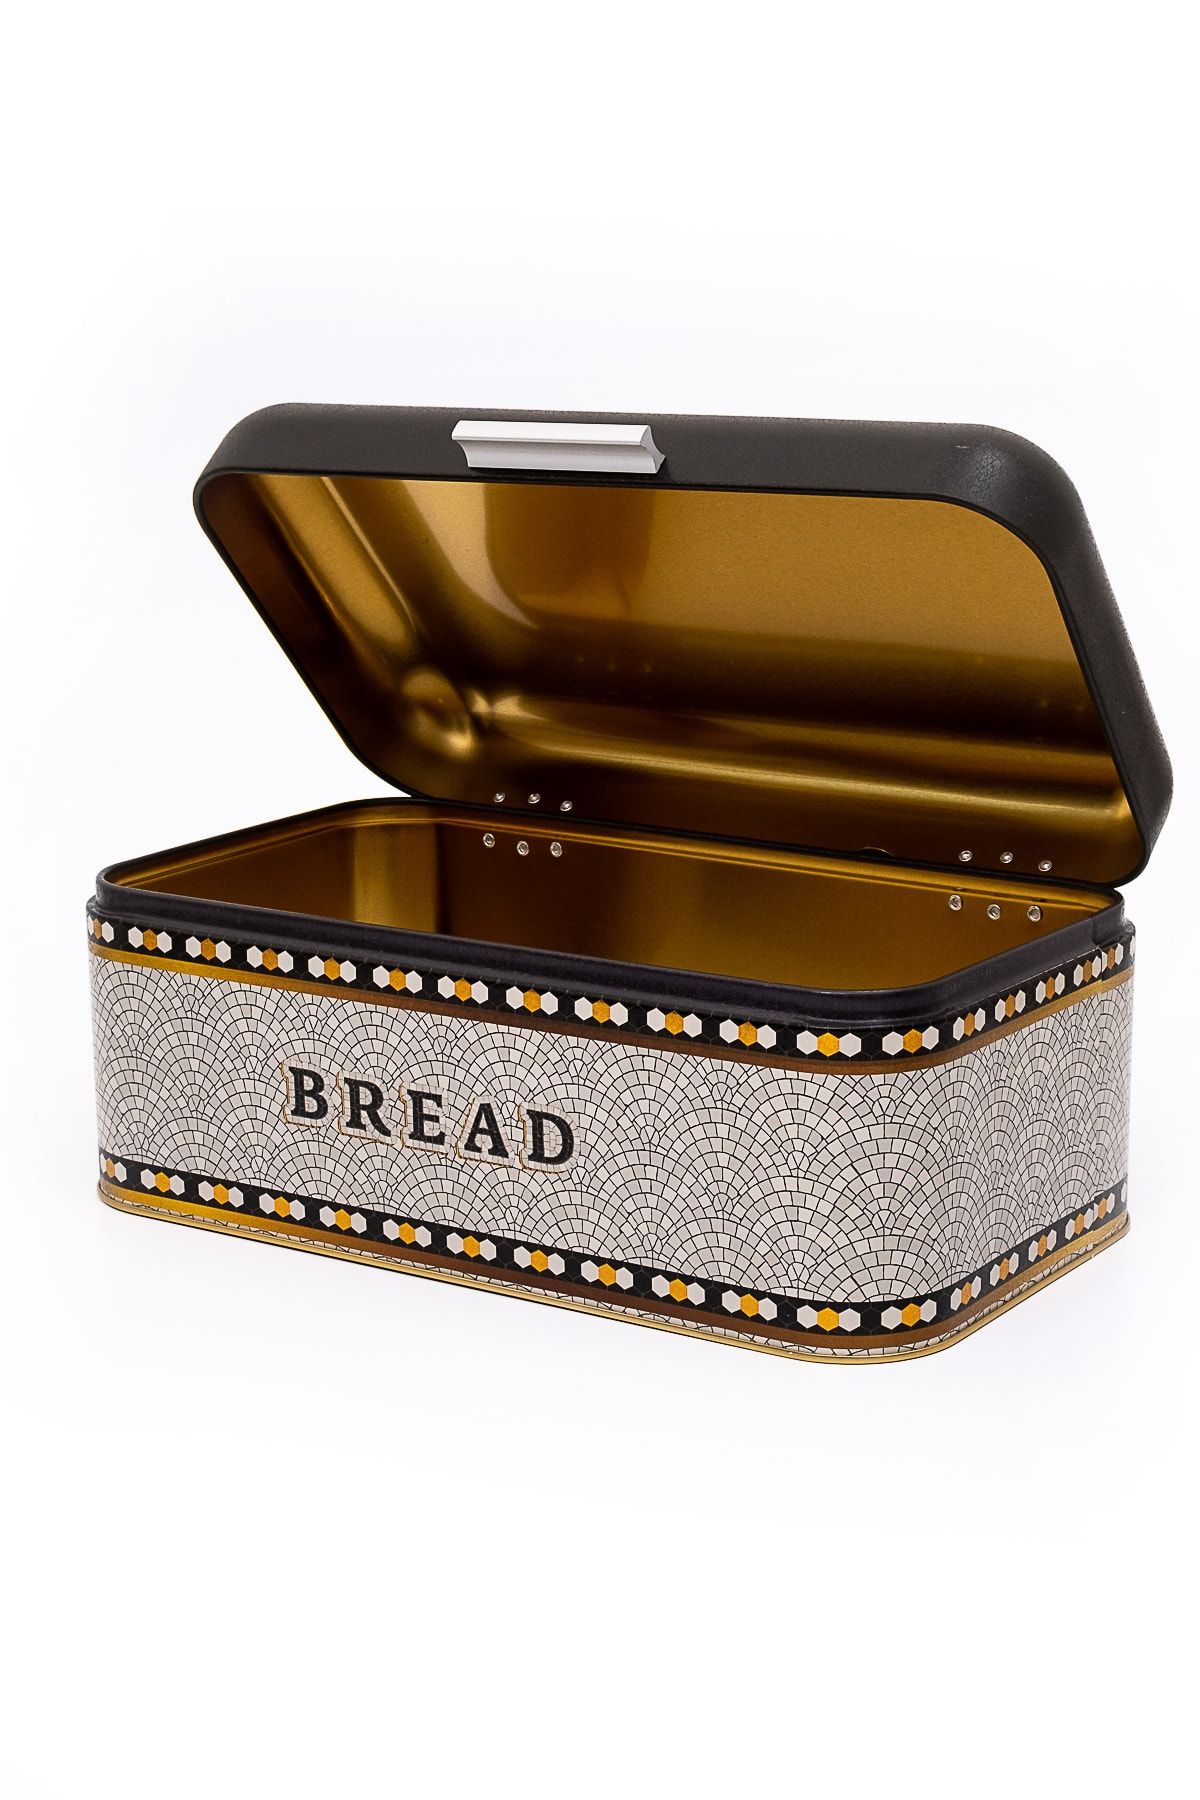 Mosaic Bread Desenli Metal Ekmek Kutusu, 9 lt